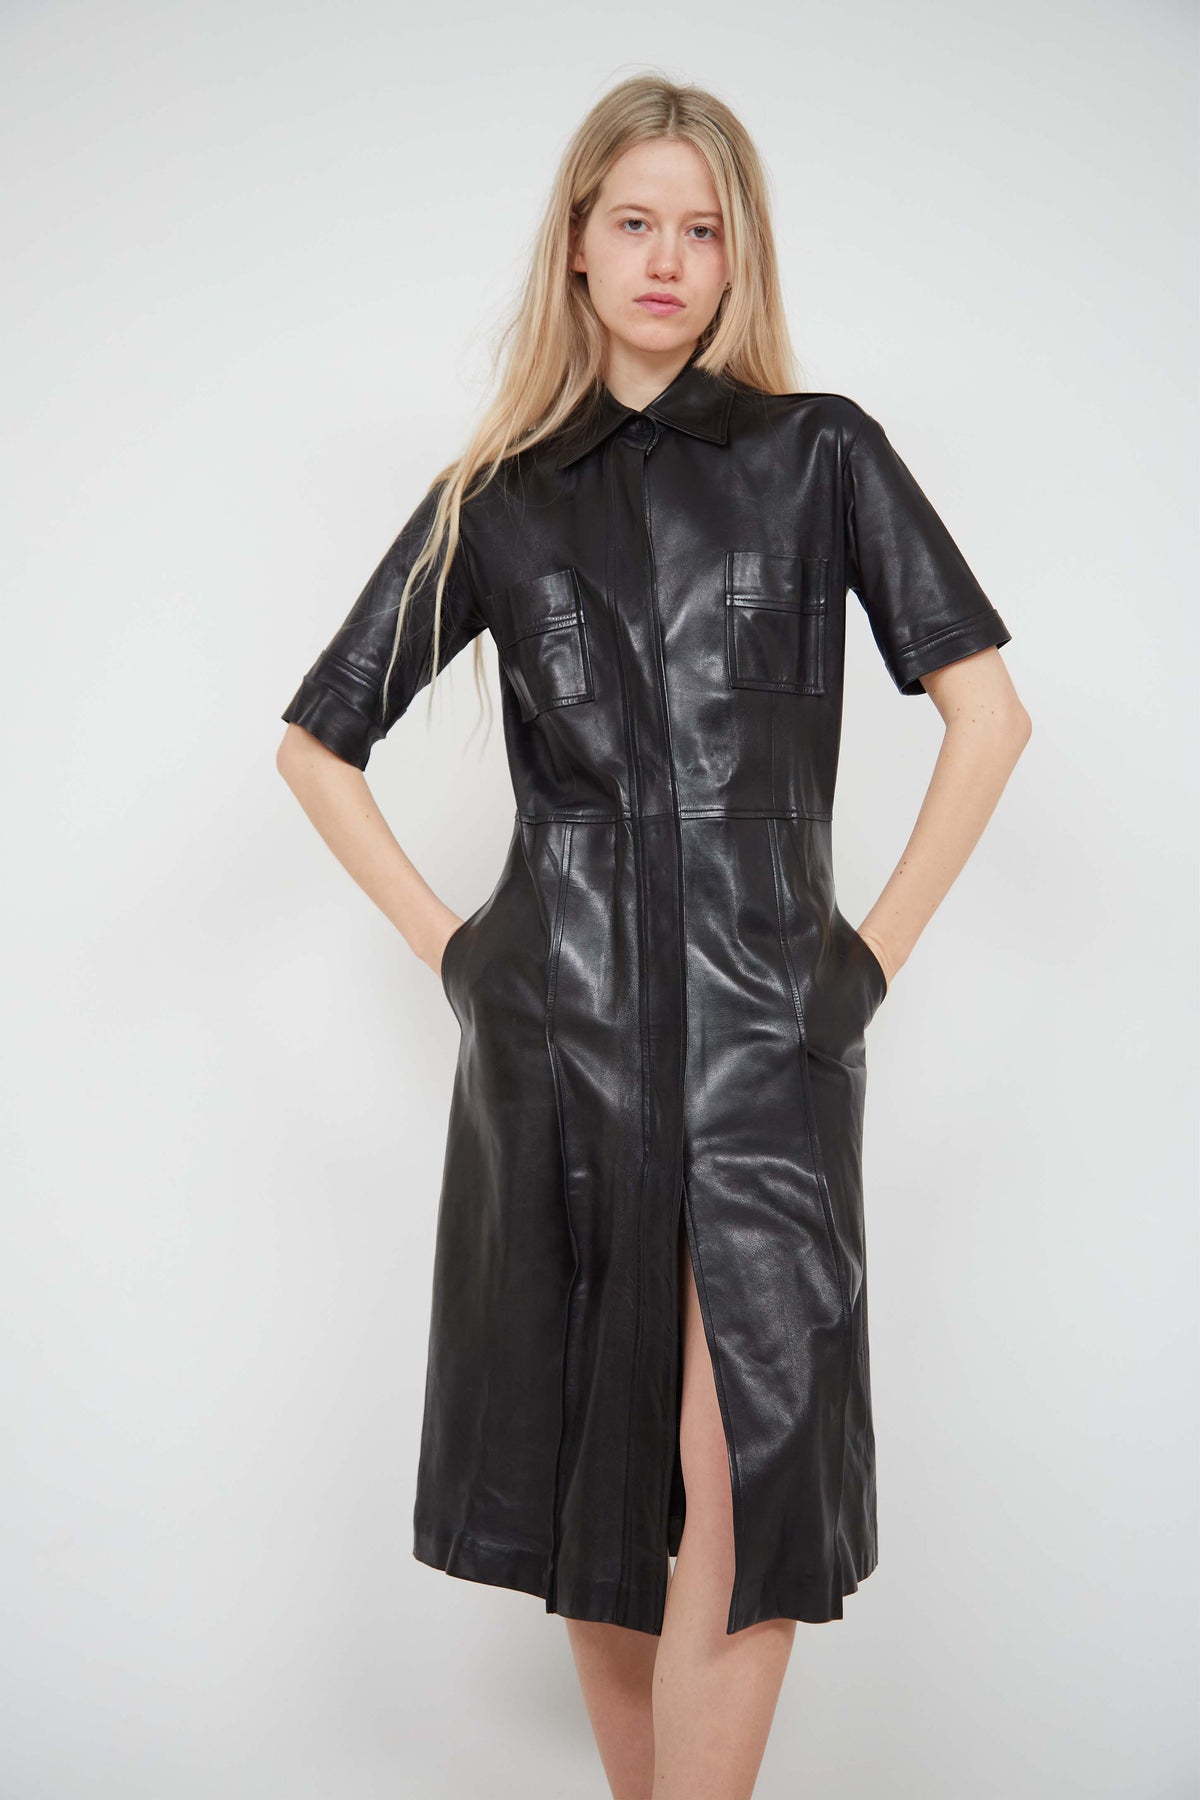 Yves Saint Laurent leather dress